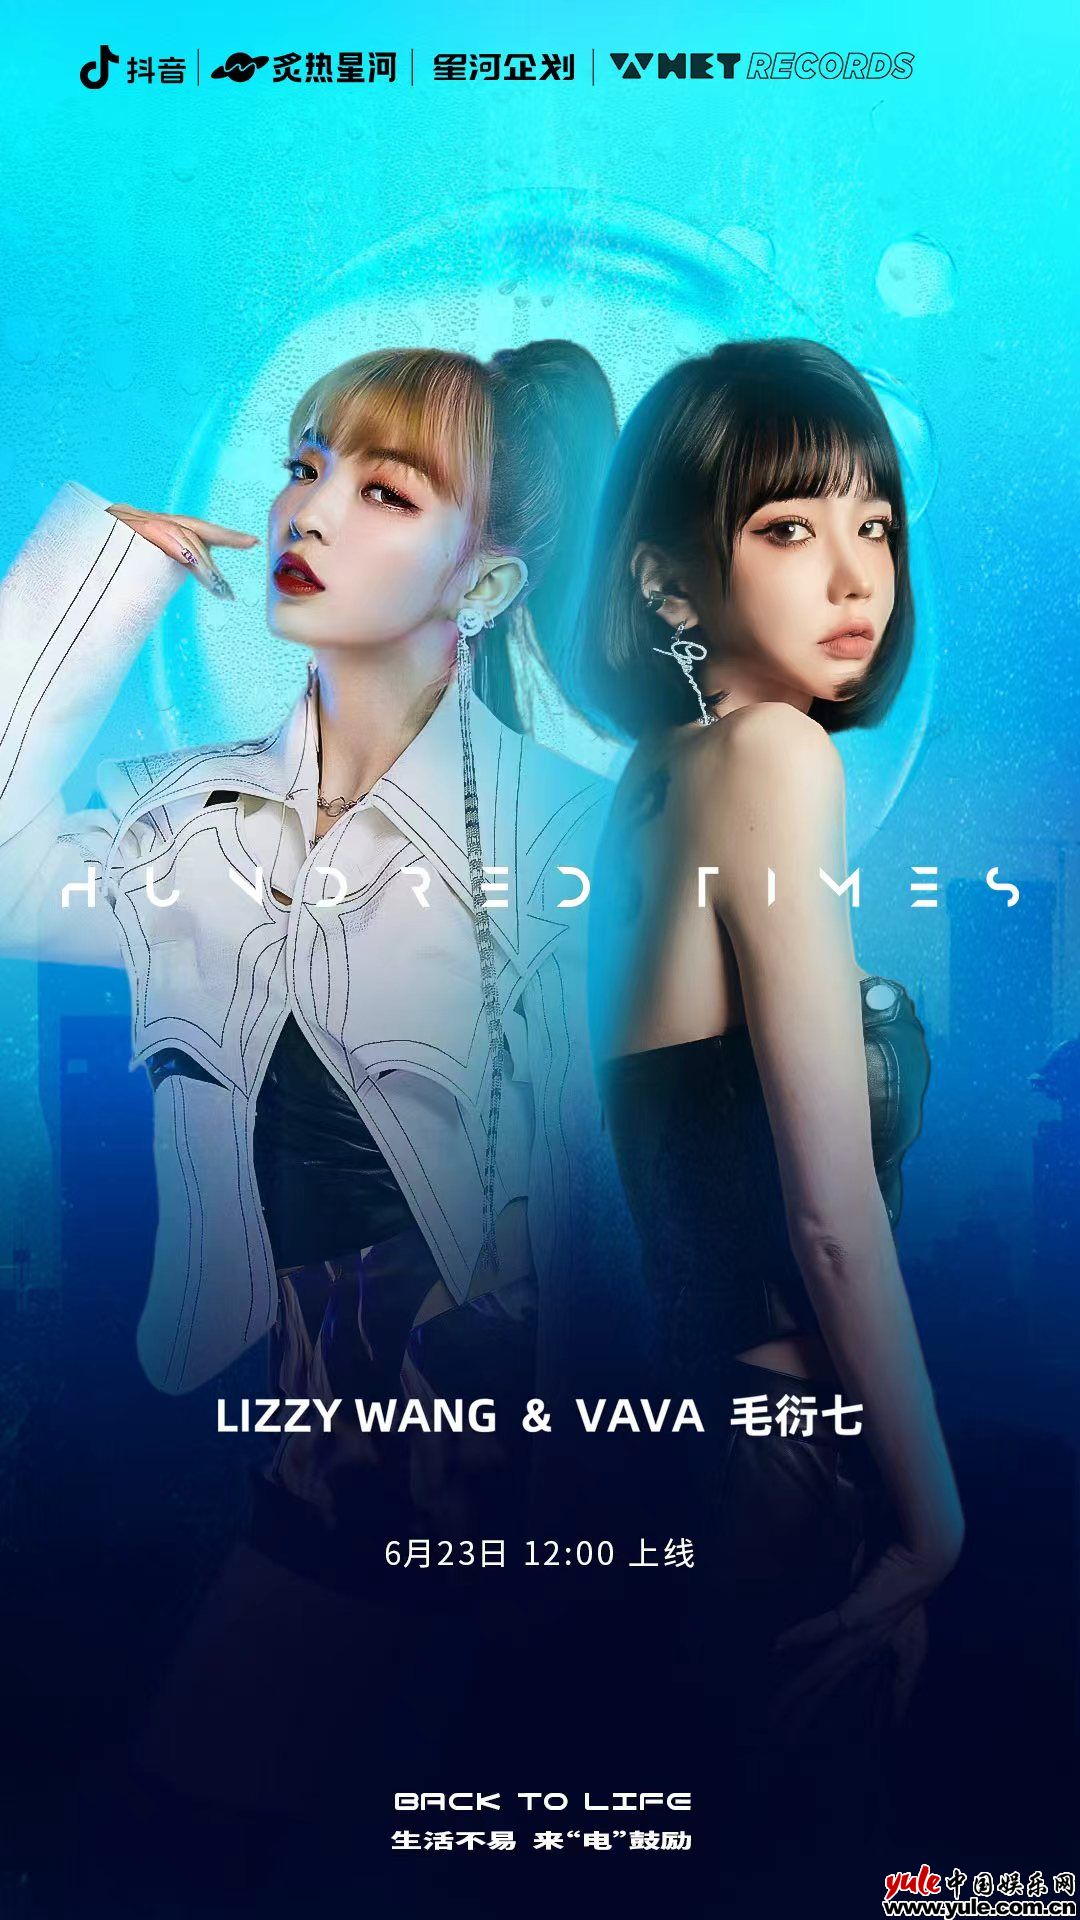 VaVa毛衍七携手Lizzy Wang王梦笛打造全新单曲《Hundred Times》 个性说唱触发绝妙氛围感